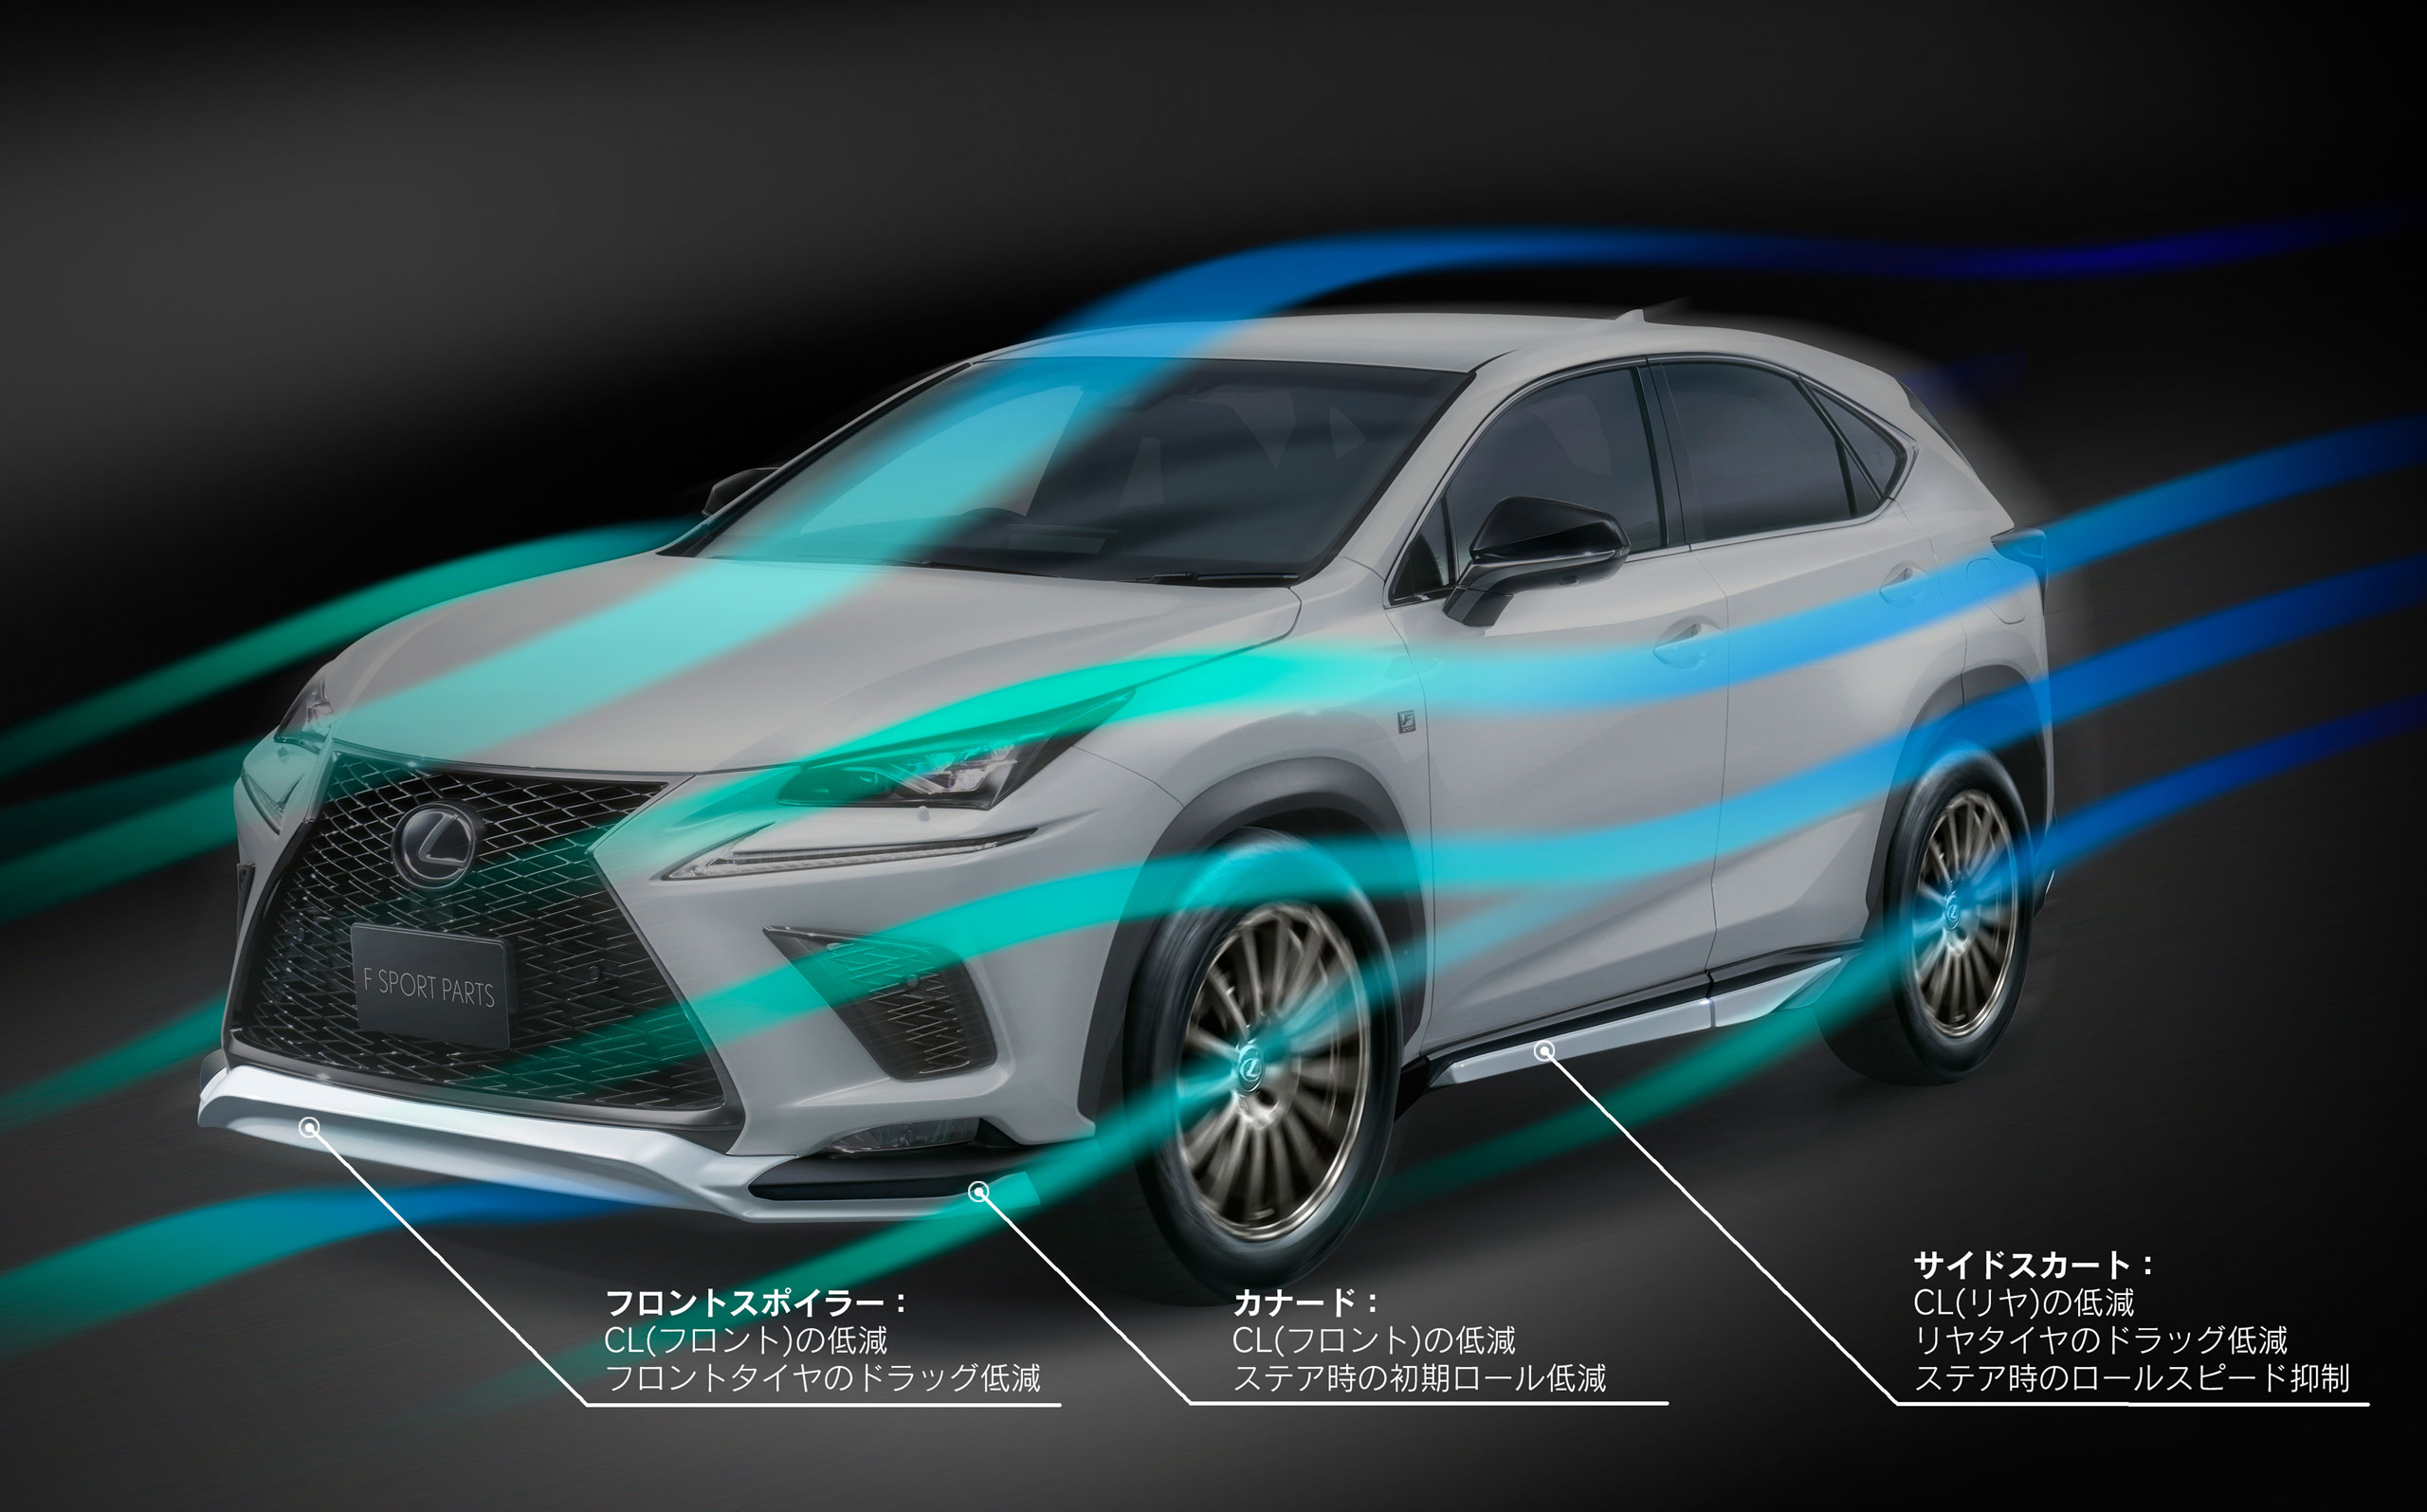 2018 Lexus NX F SPORT Body Kit from TRD Japan Lexus